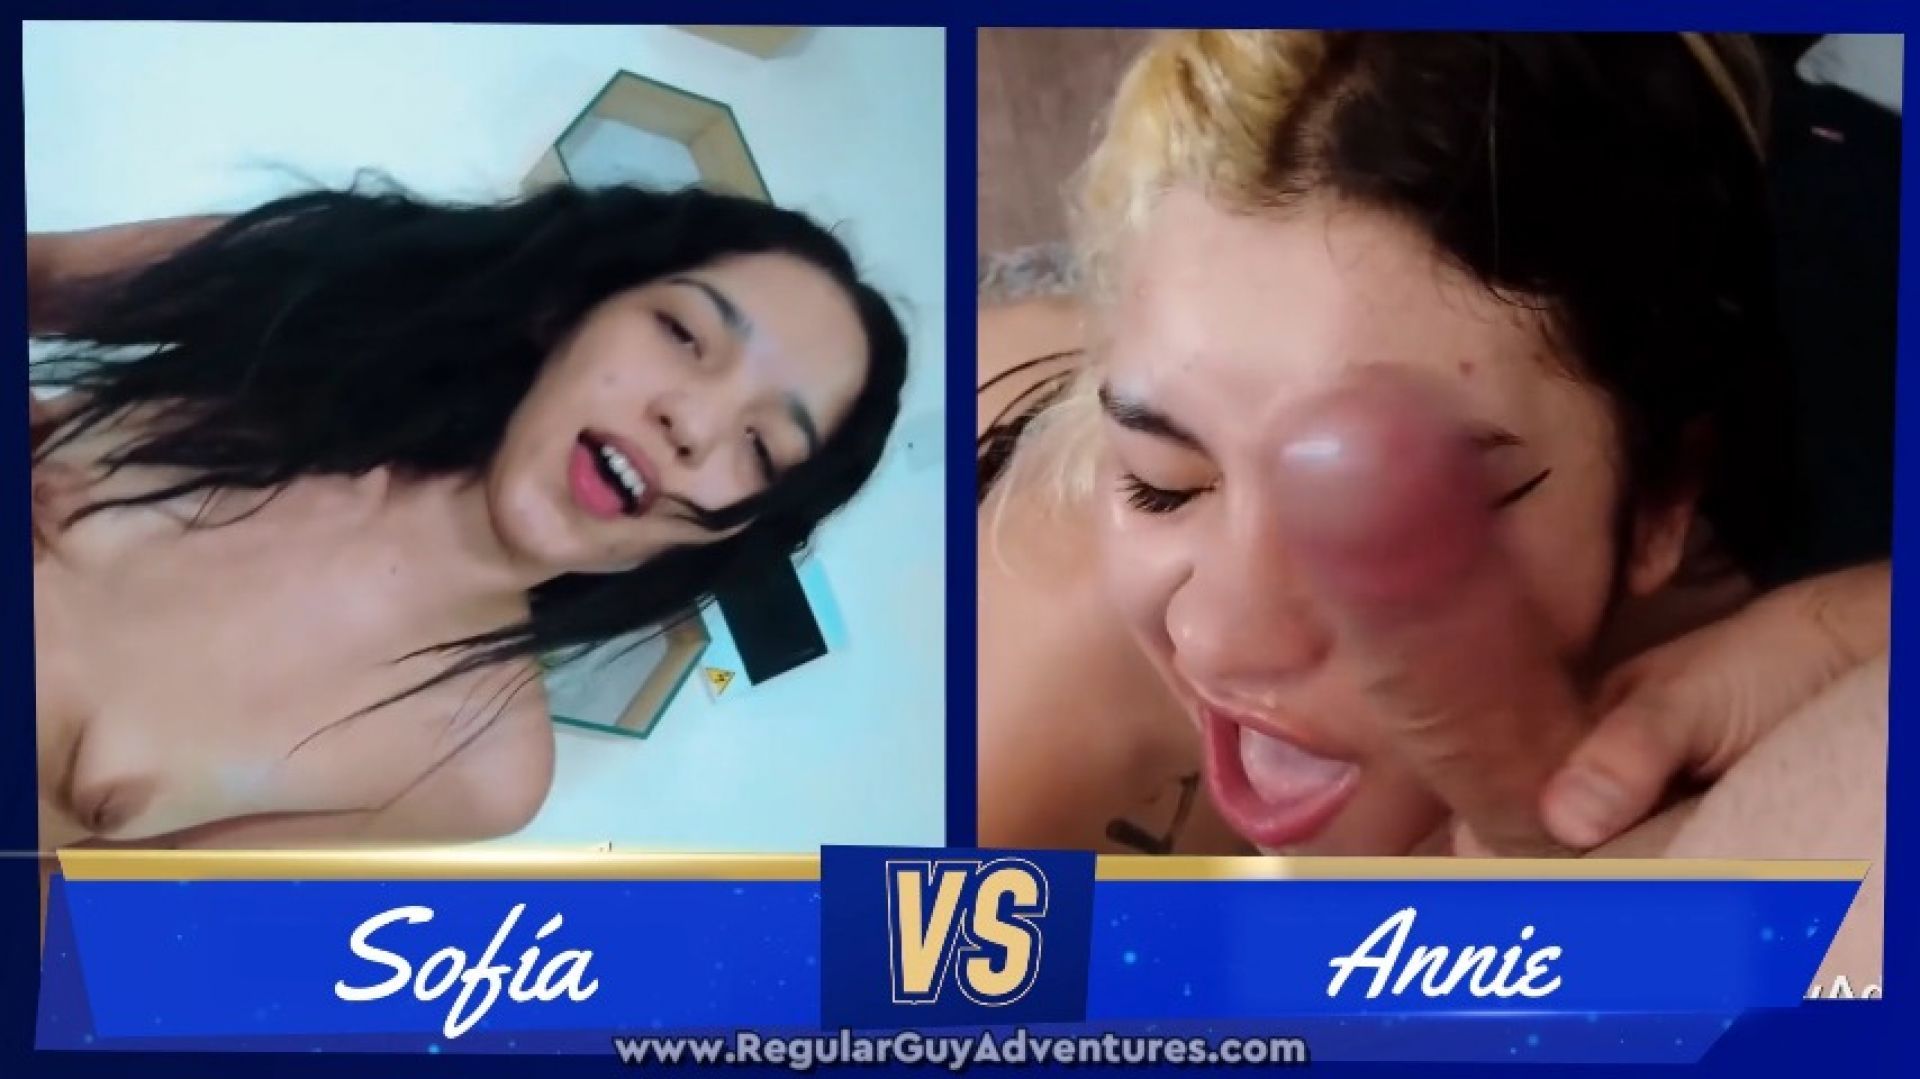 VERSUS#6 - SOFIA vs ANNIE